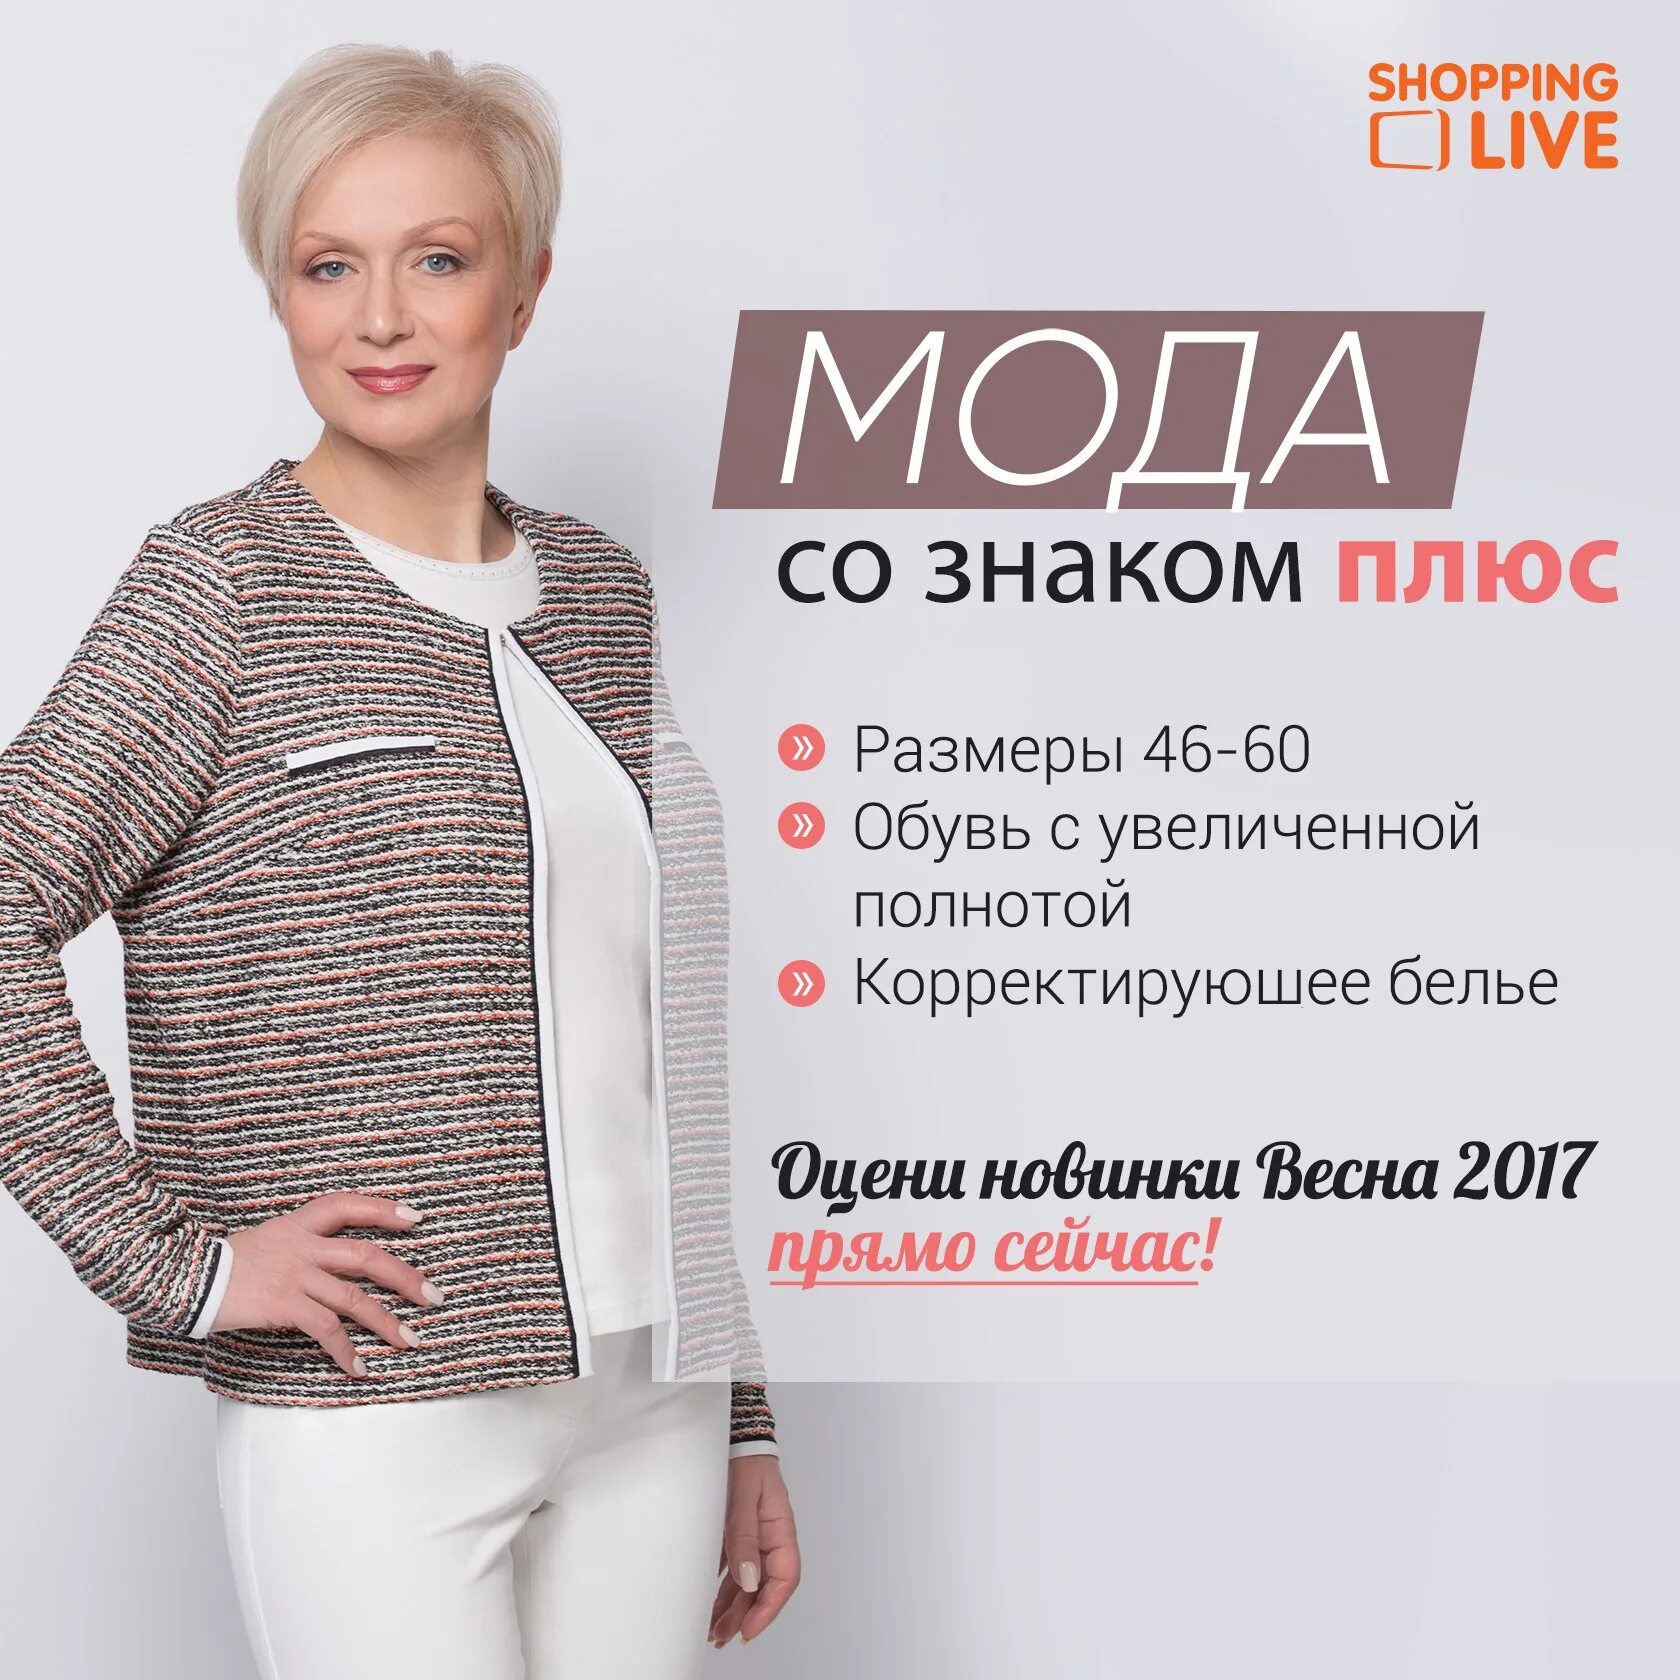 Shopping Live интернет-магазин. Shopping Live интернет магазин каталог. SHOPPINGLIVE.ru интернет магазин. Каталог одежды.